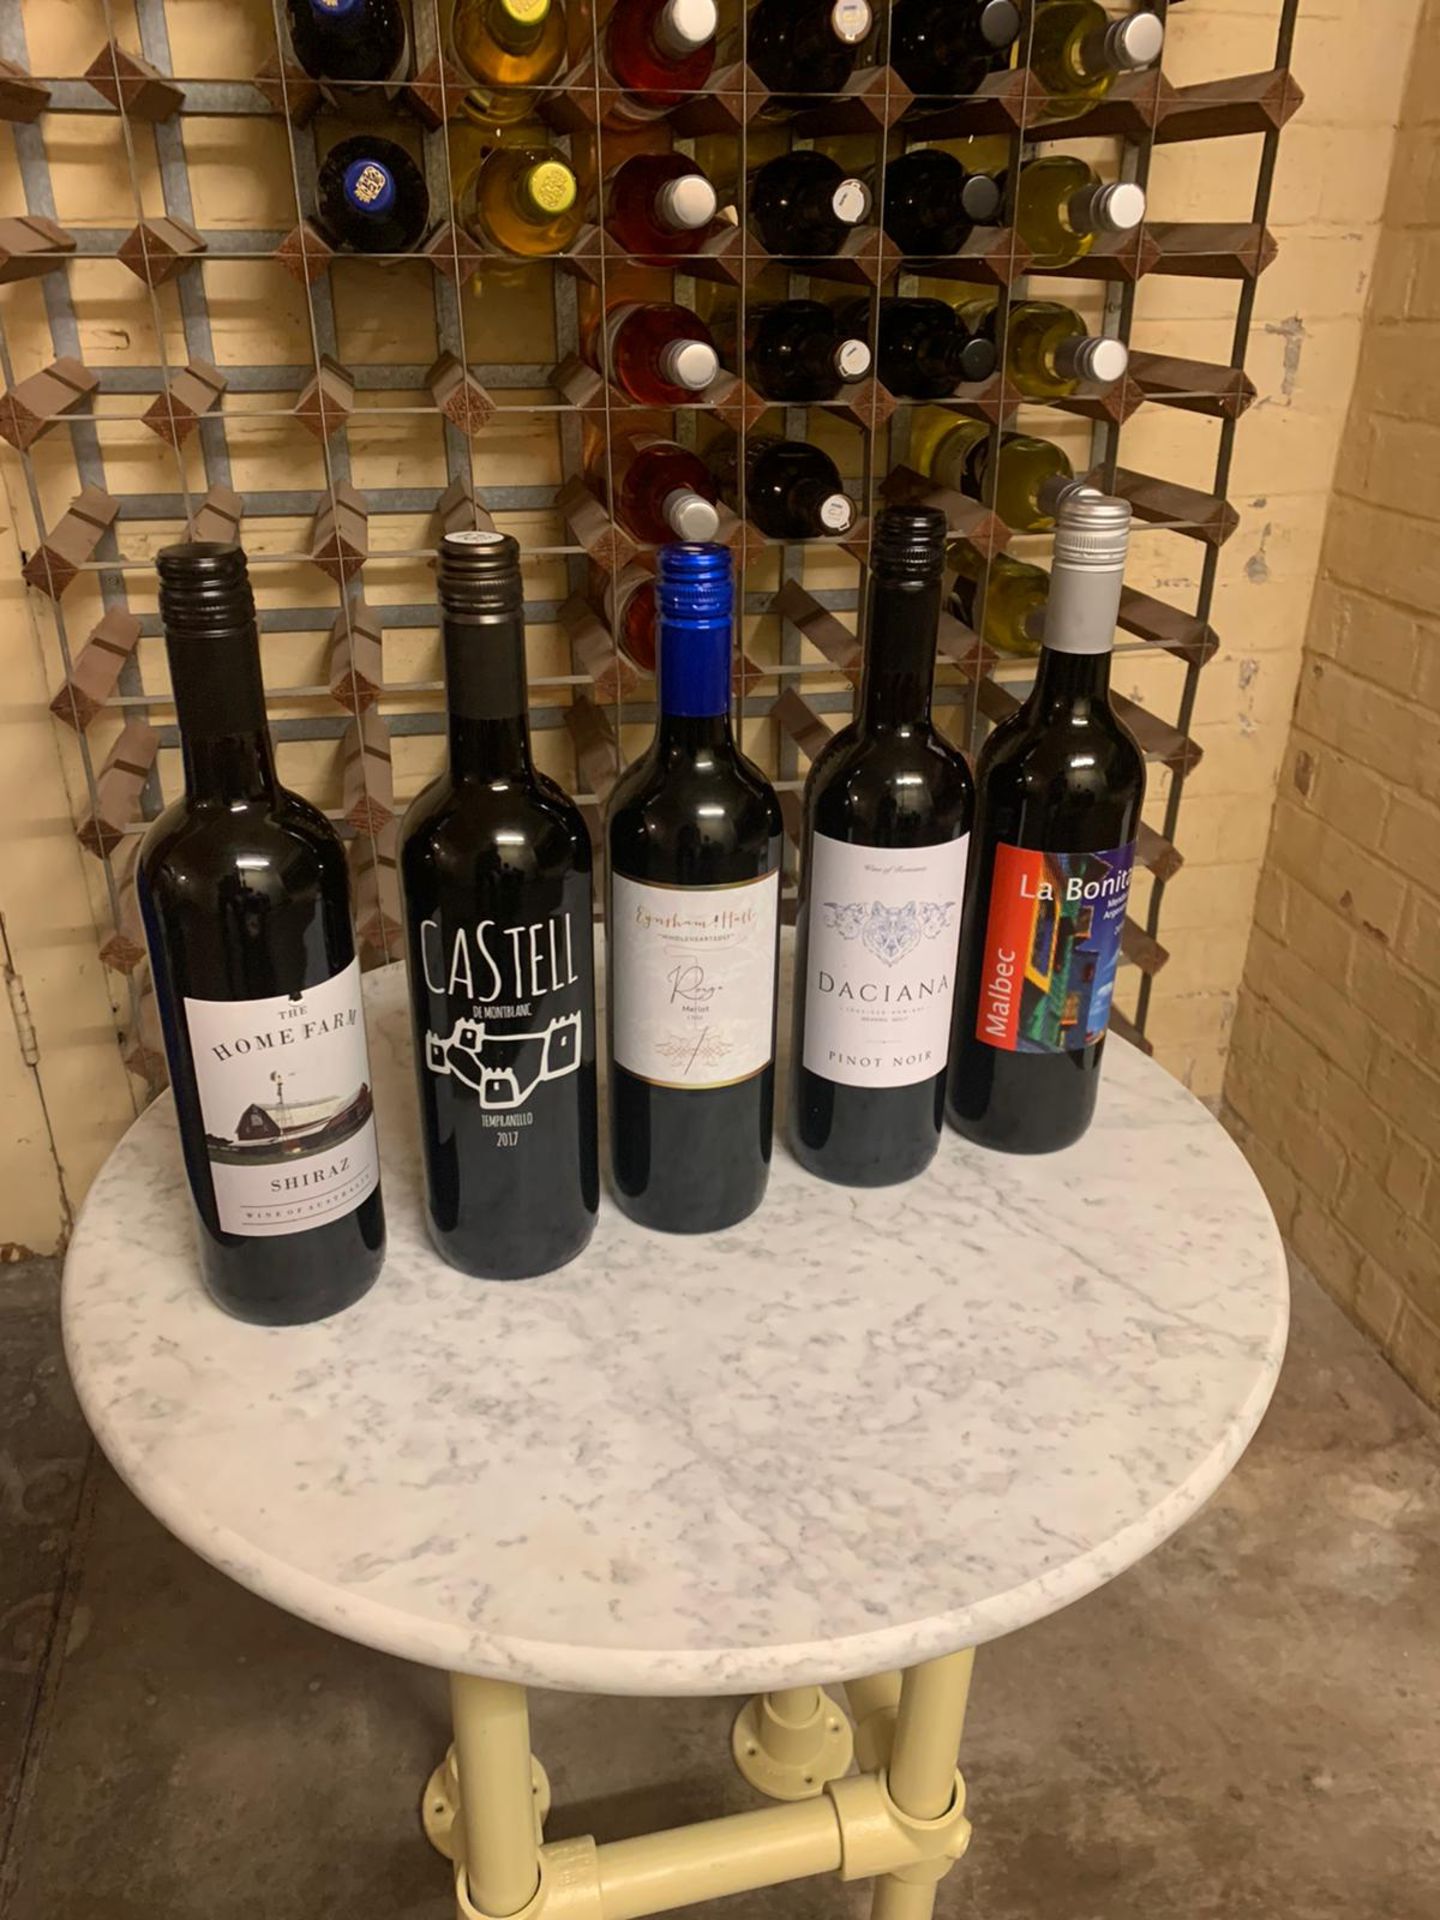 31 x sealed bottles - La Bonita Malbec Mendoza Argentina 2018 75cl - Image 2 of 3